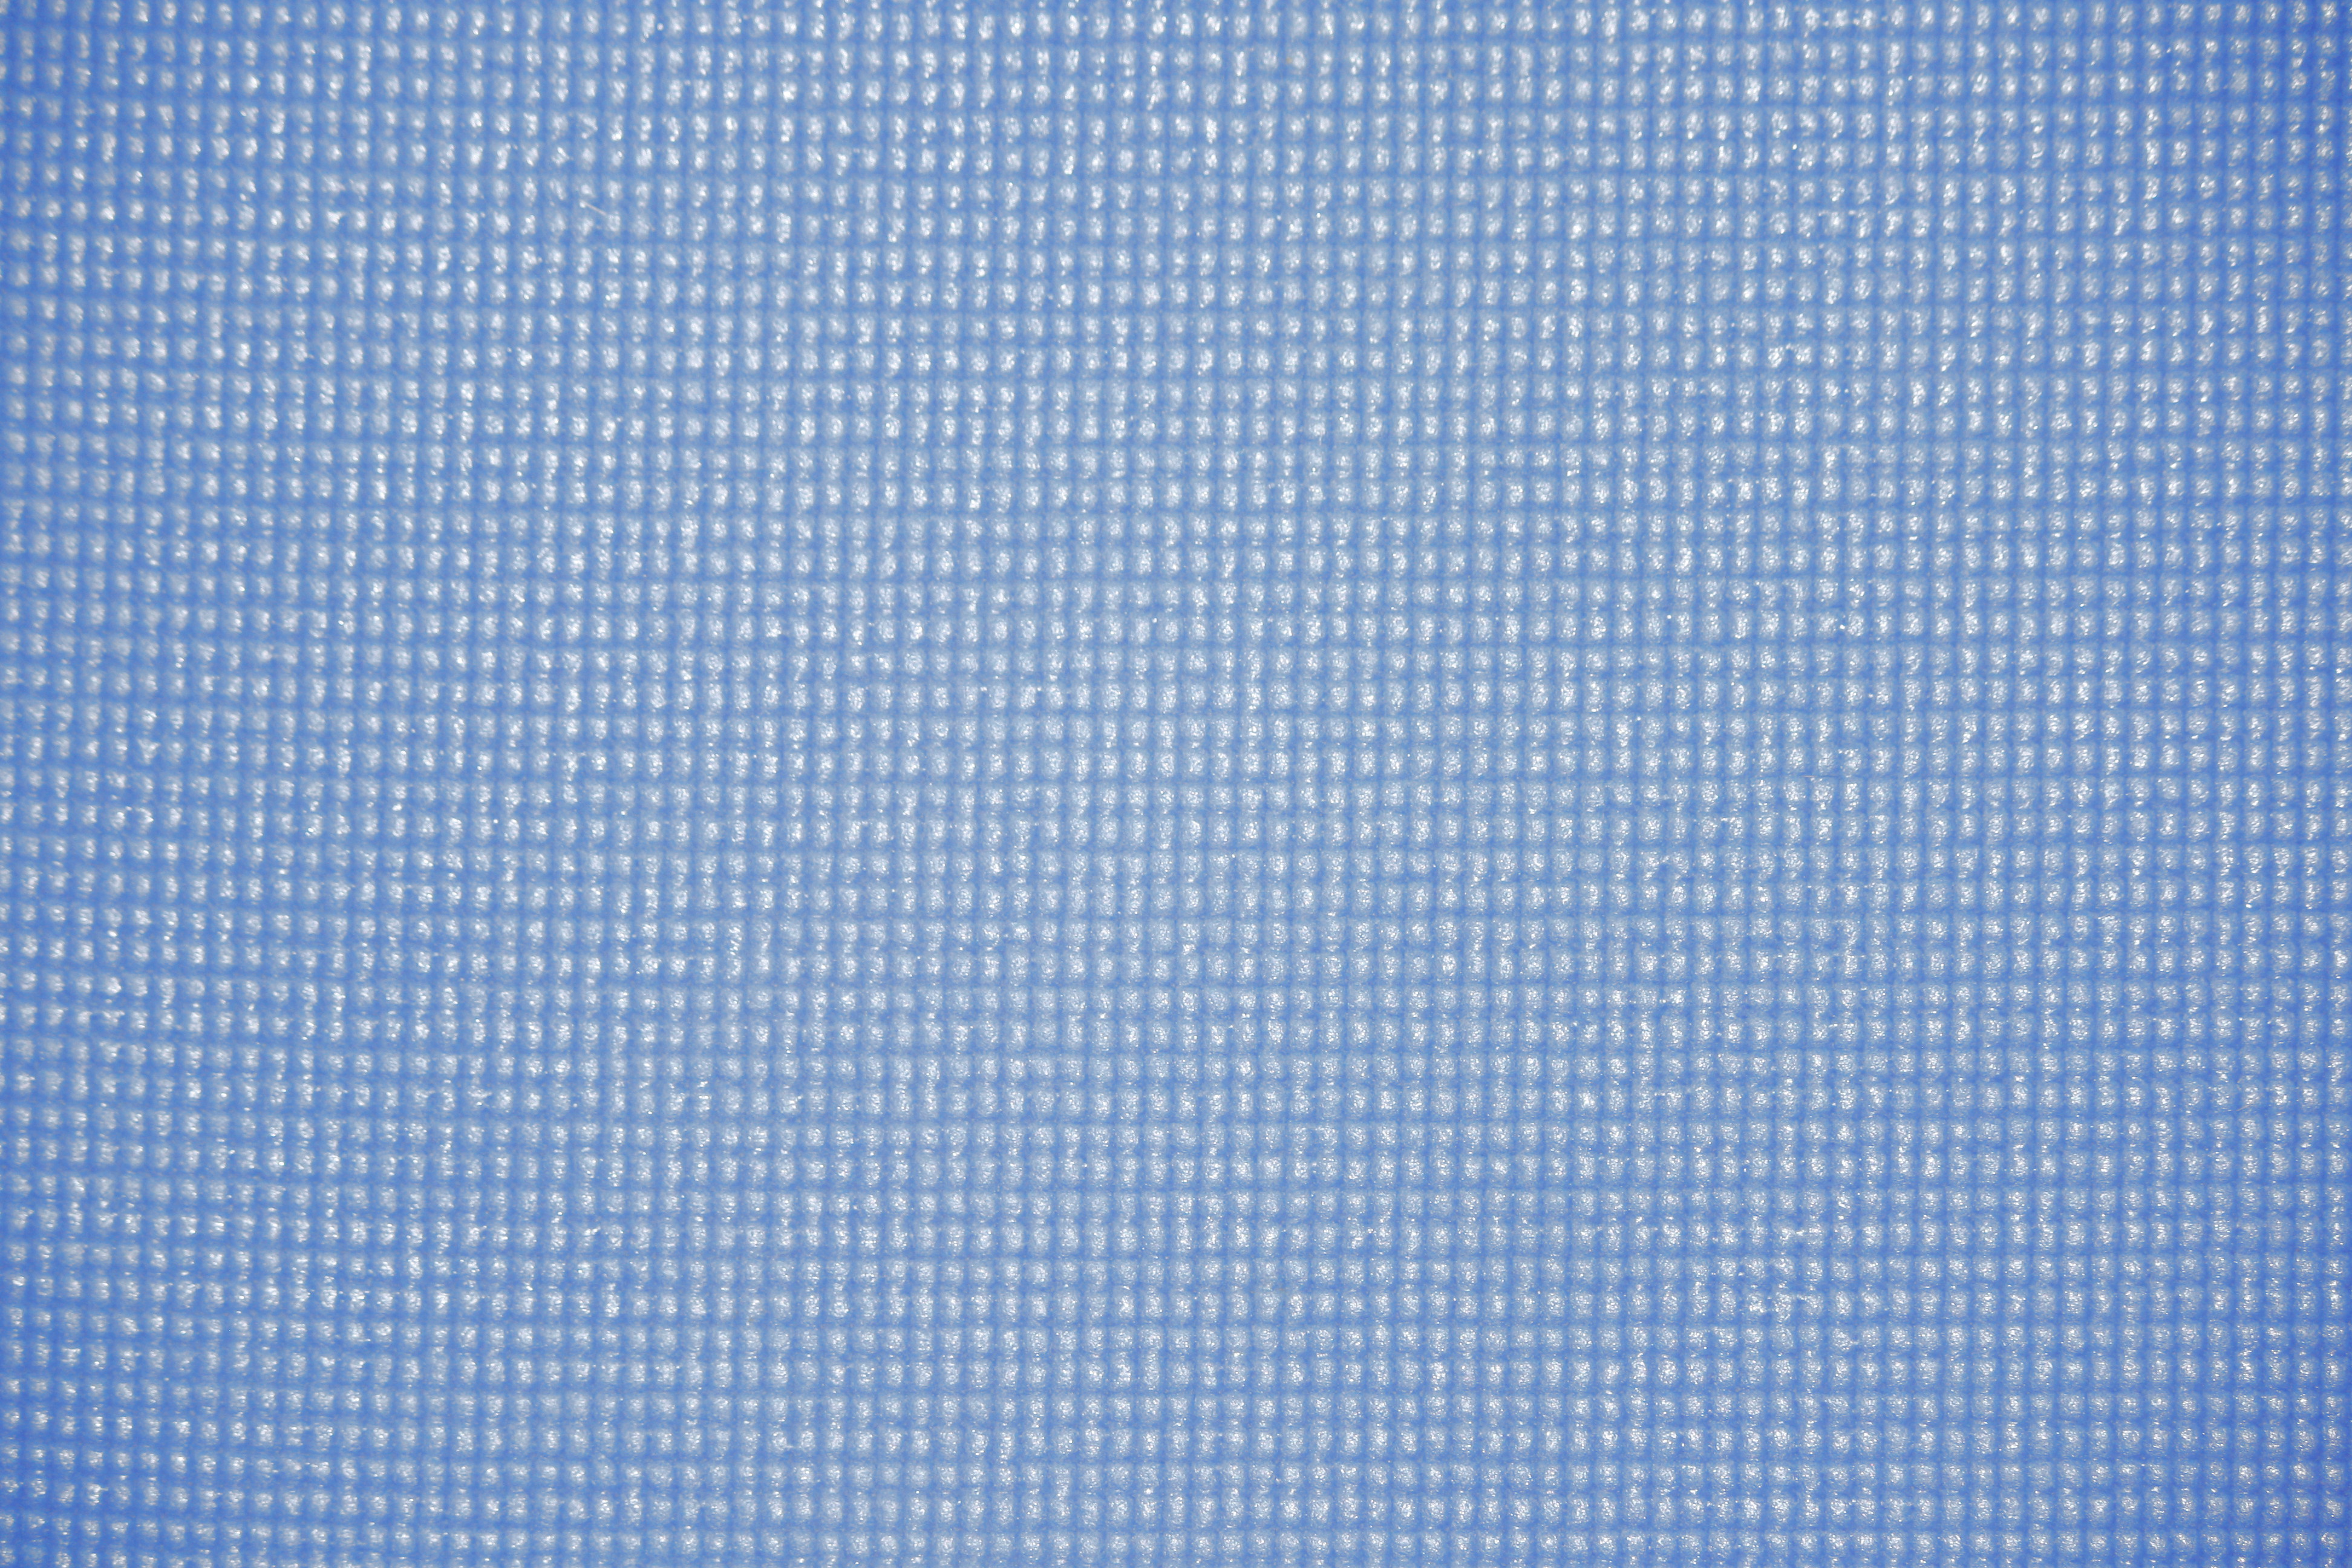 Light Blue Yoga Exercise Mat Texture Picture, Free Photograph